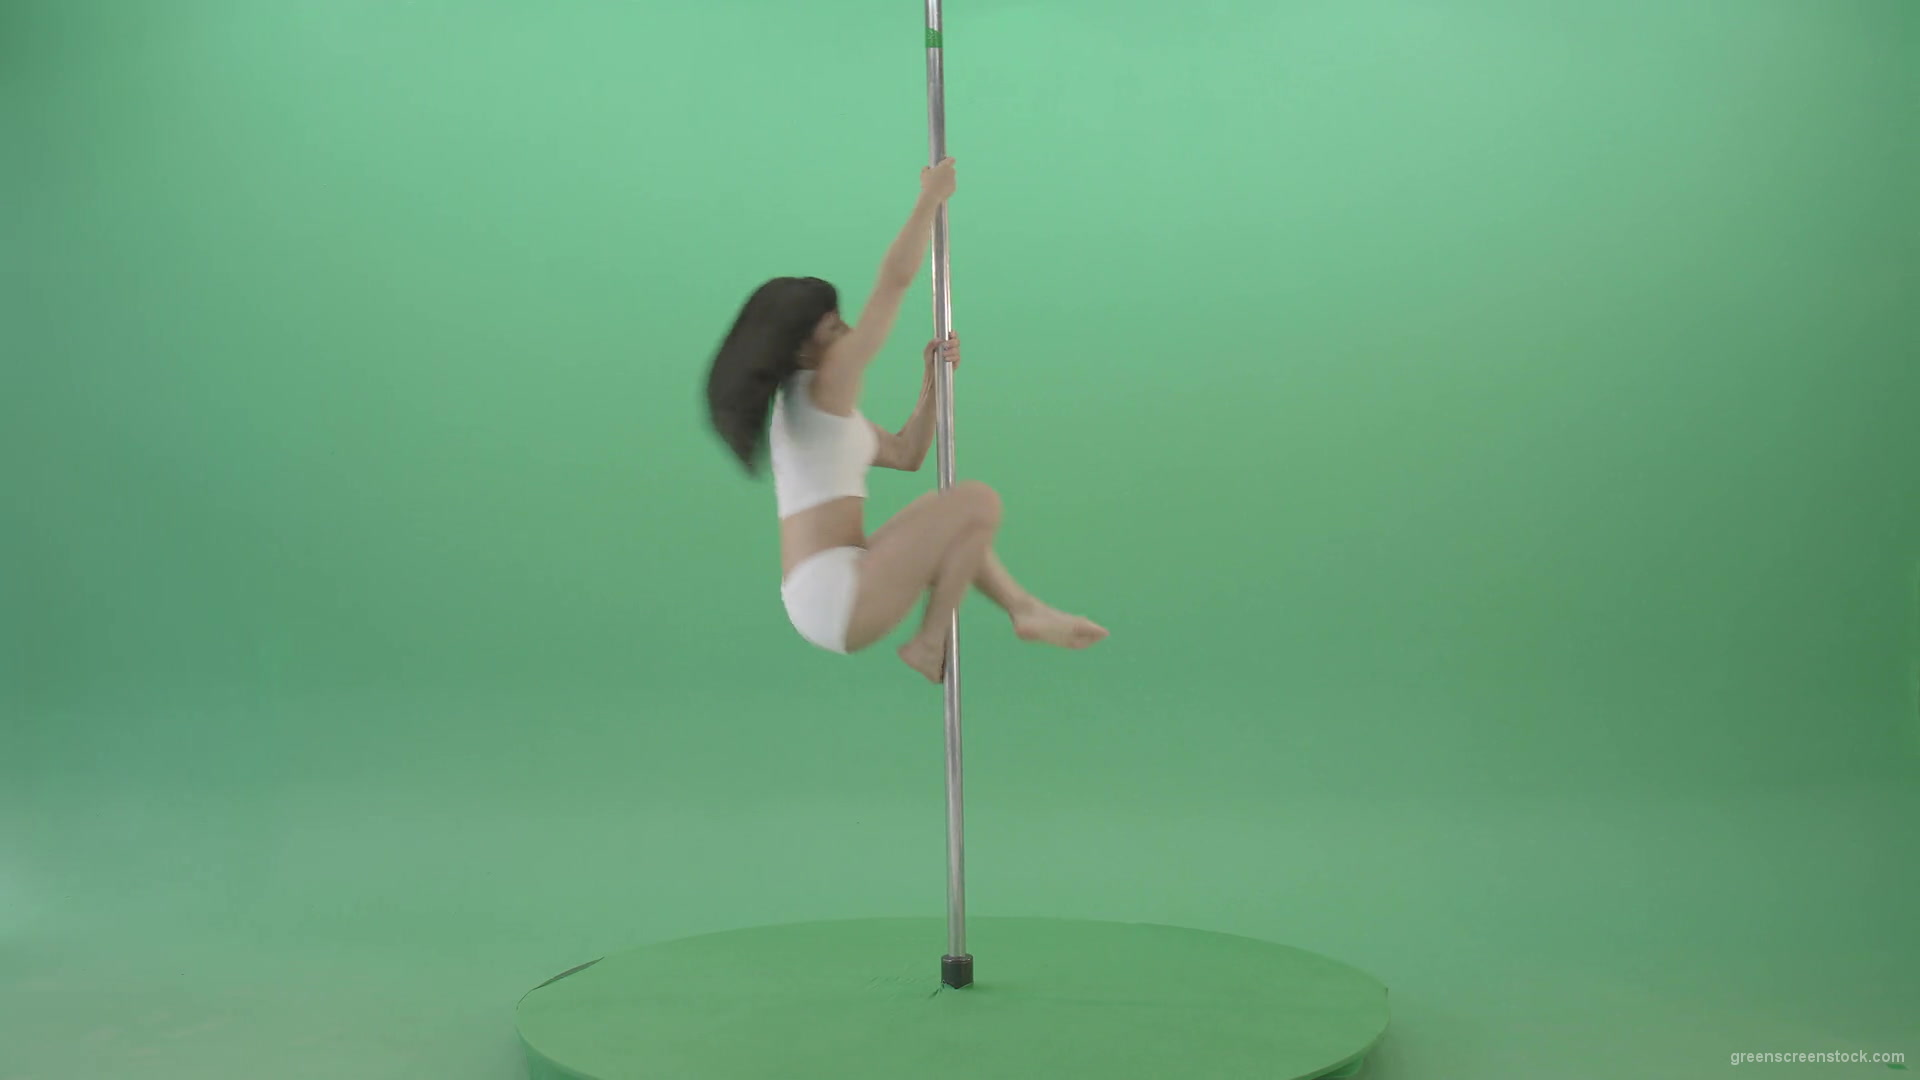 Pole-dance-trainer-girl-has-a-sport-flight-on-green-screen-4K-Video-Footage-1920_002 Green Screen Stock